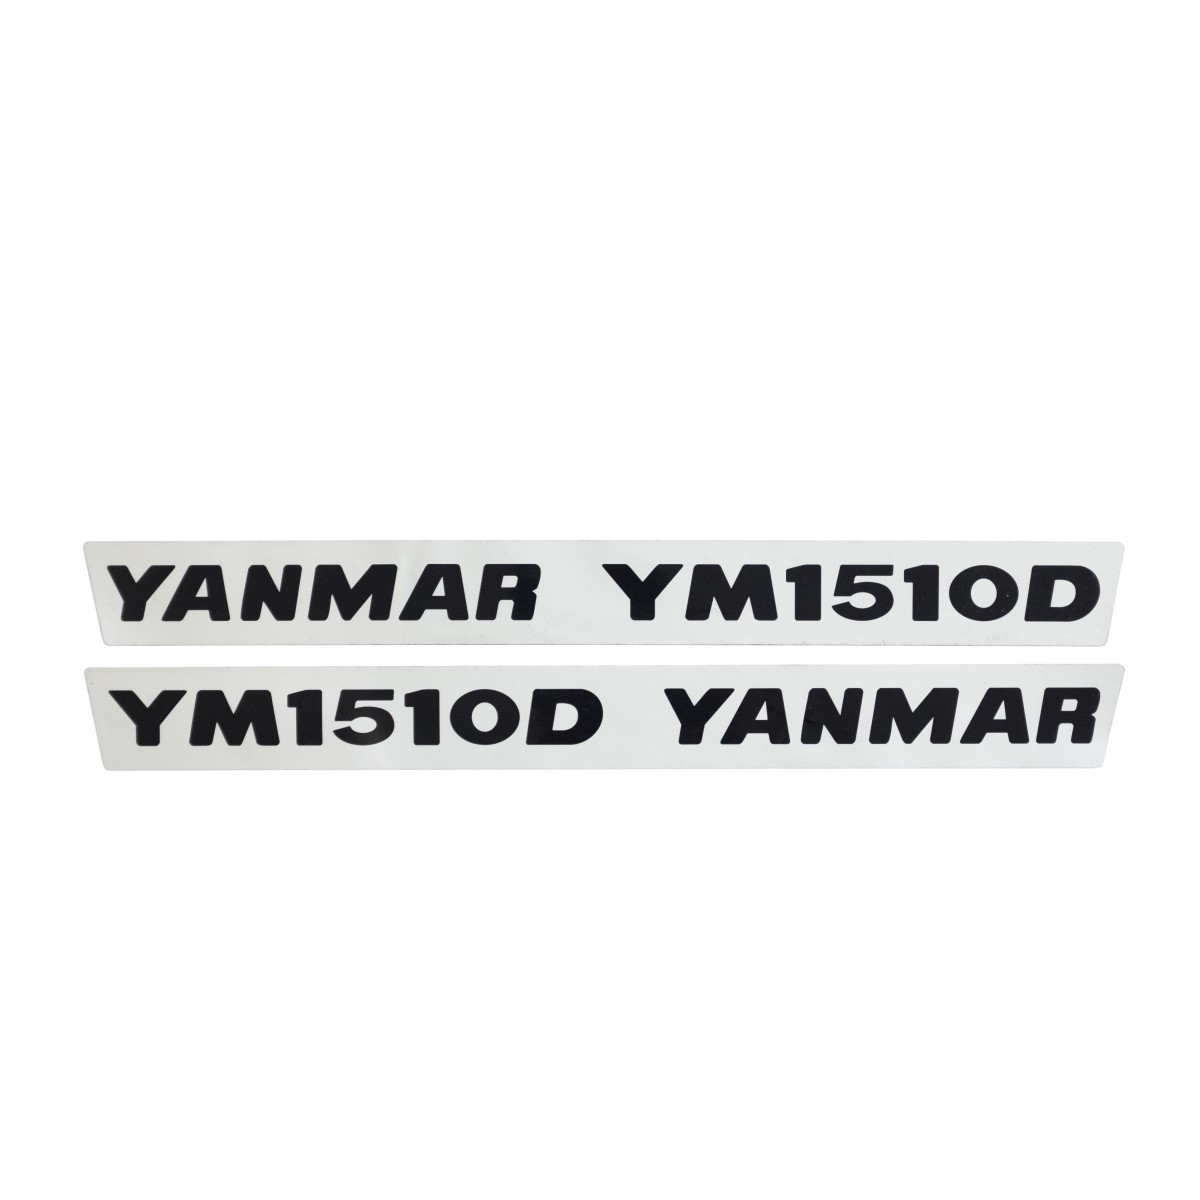 Stickers (2 pcs) Yanmar YM1510D